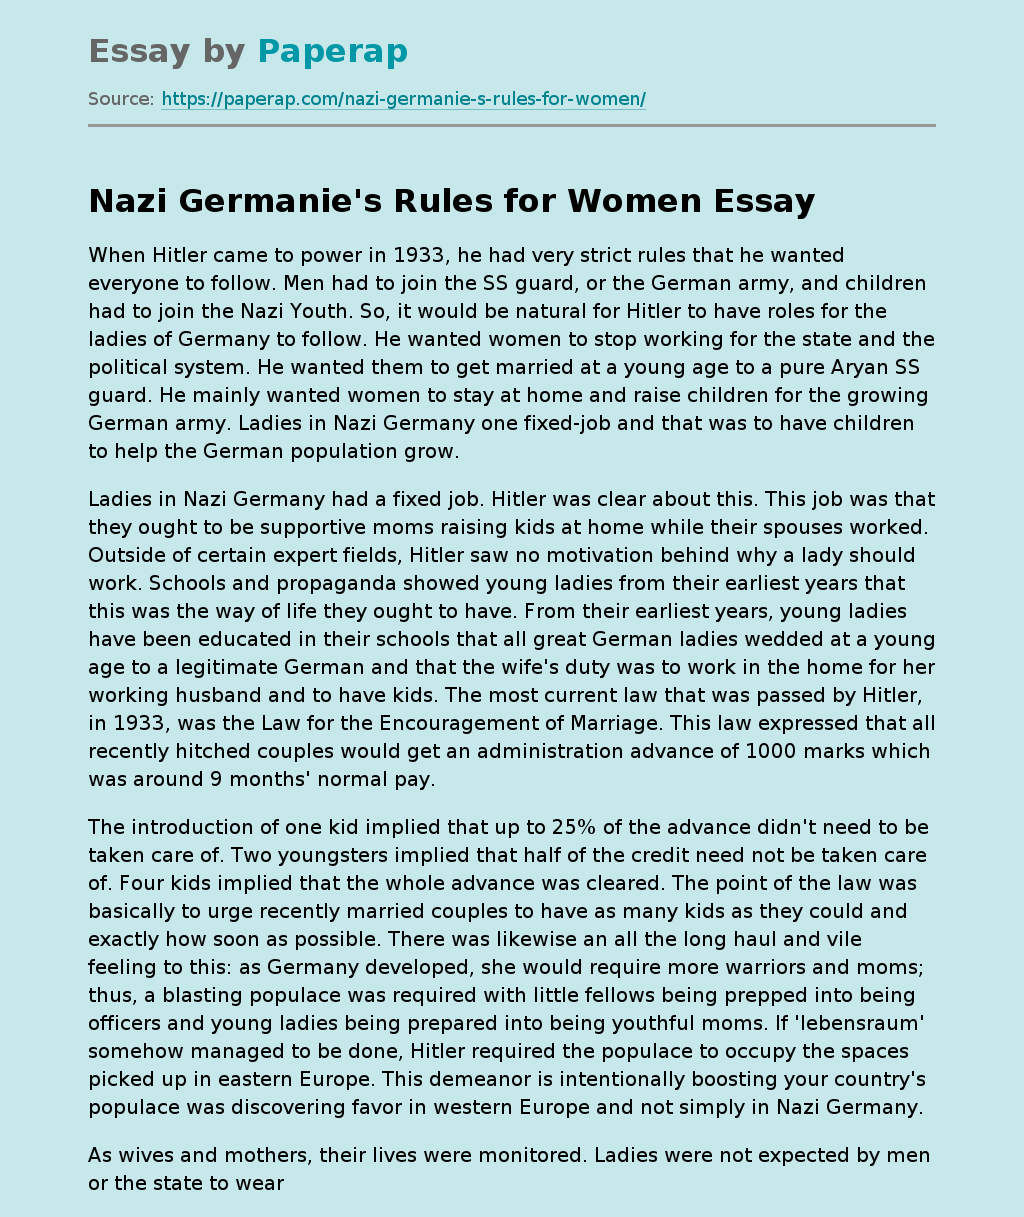 Nazi Germanie's Rules for Women